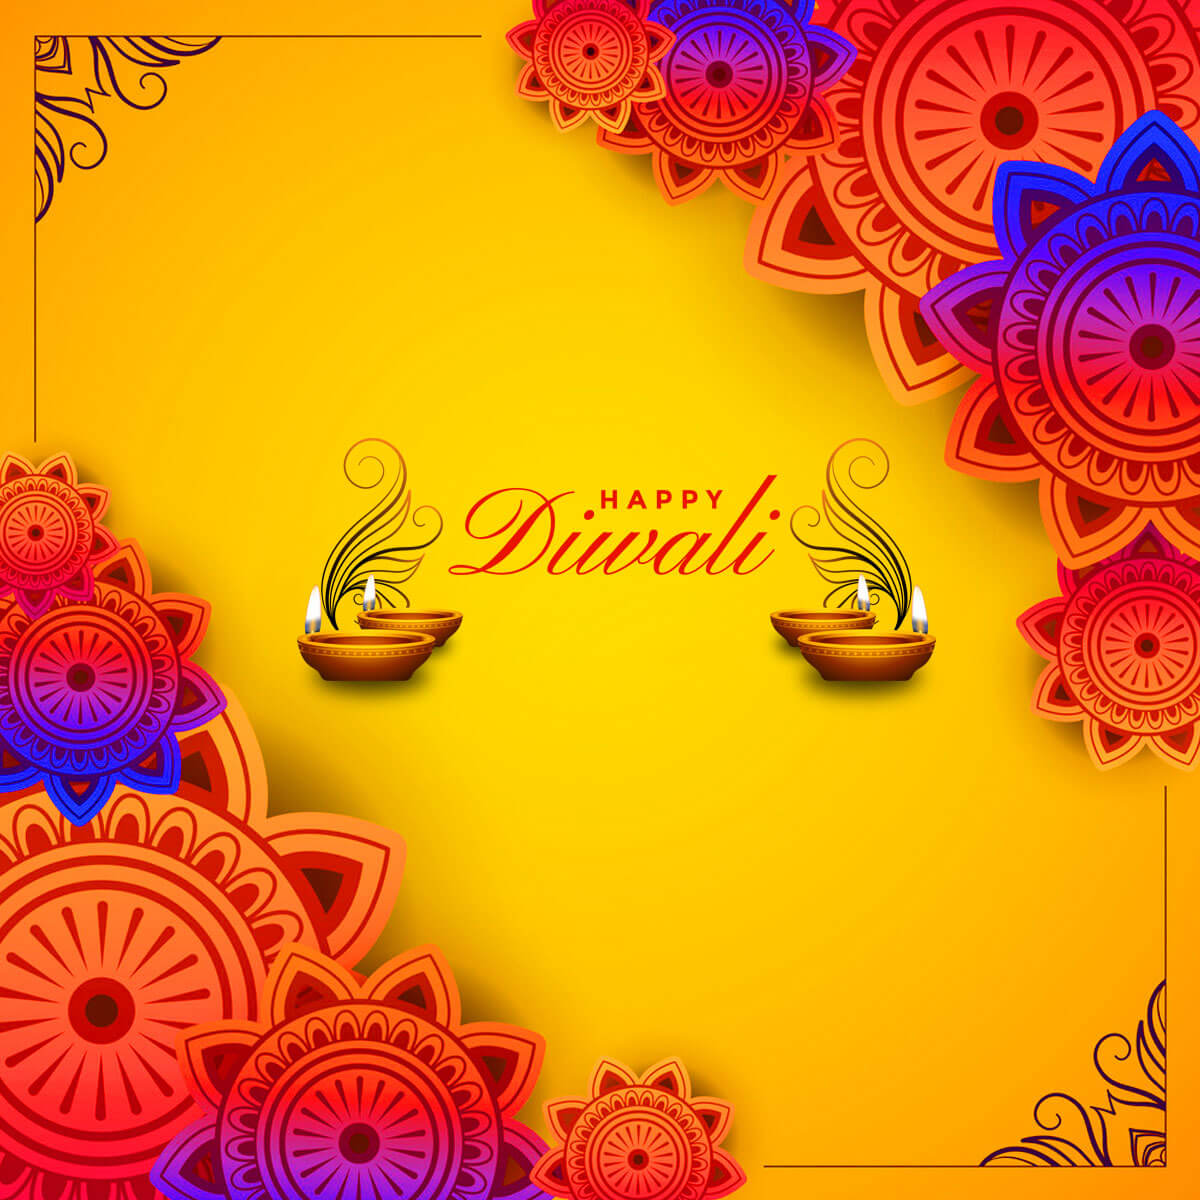 Happy diwali rangoli religious posters design vector image